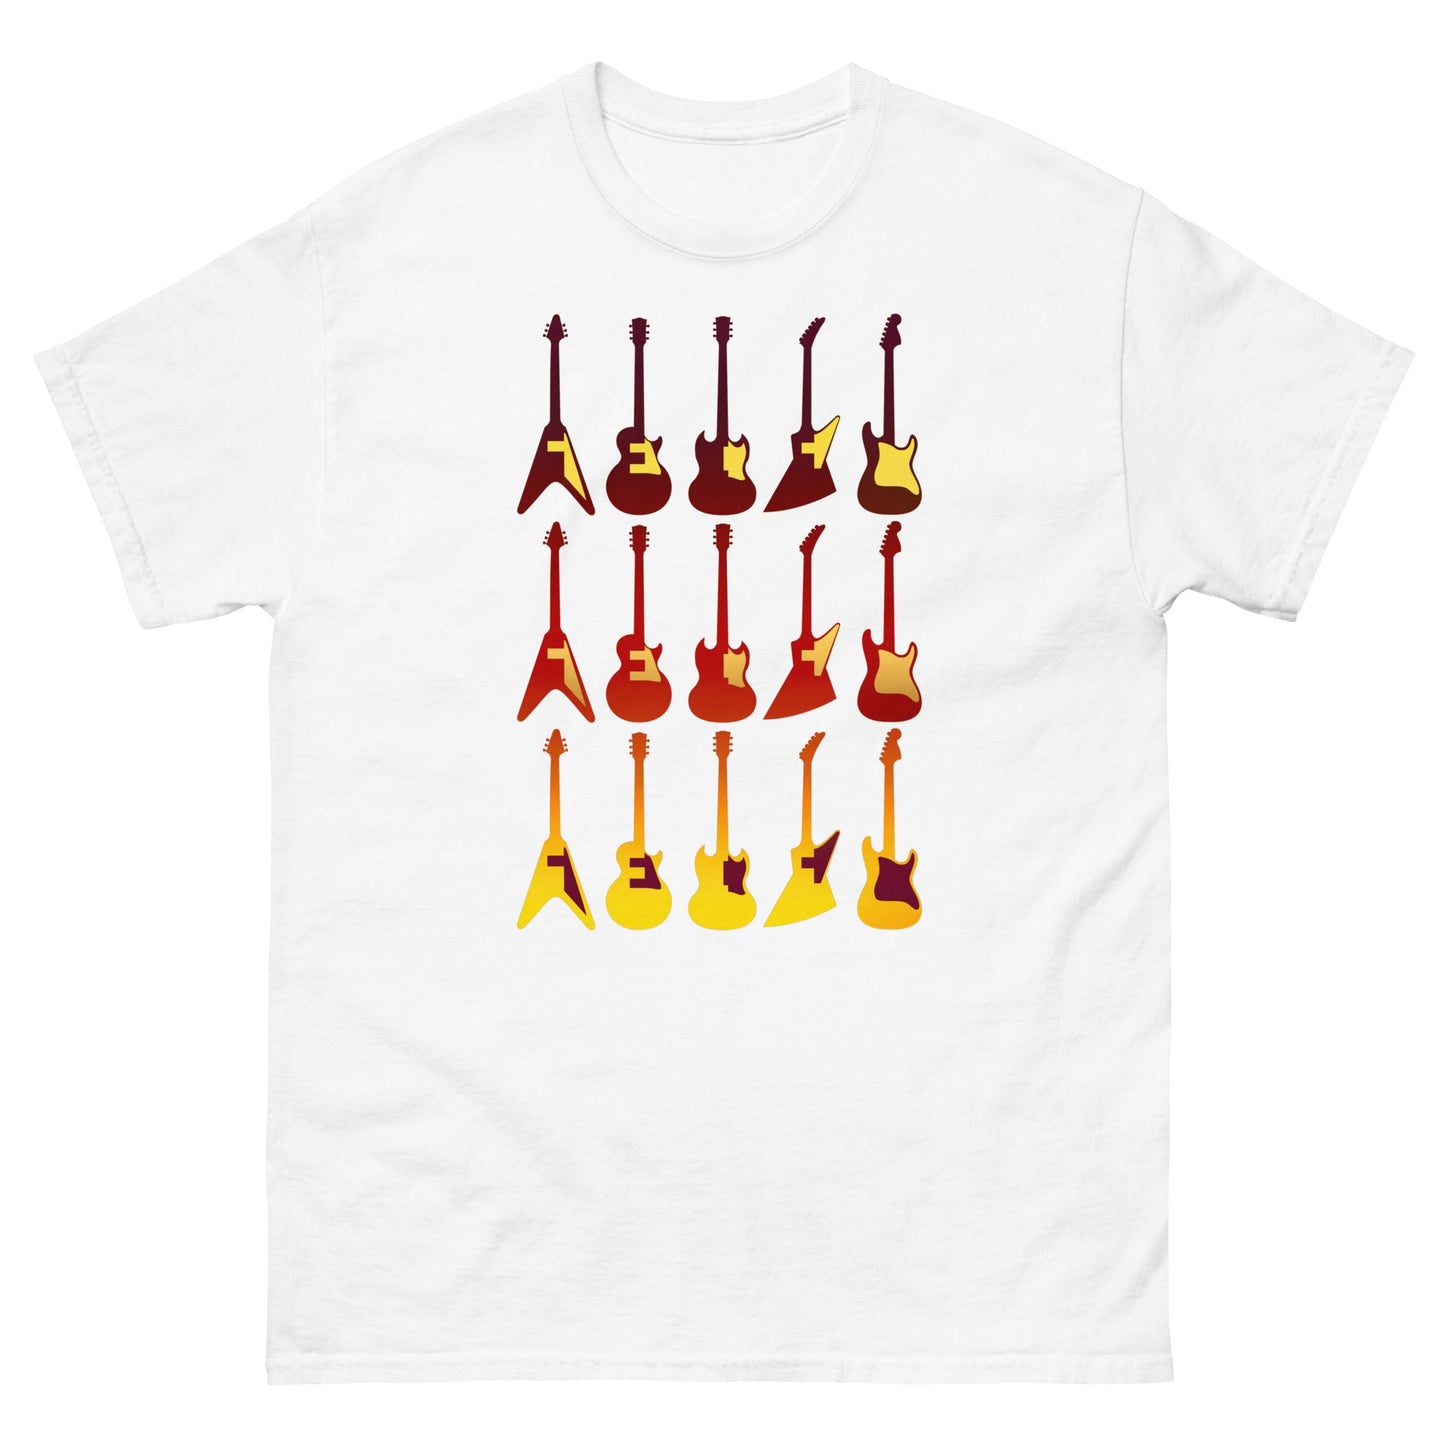 Scar Design White / S Retro Guitars T-shirt